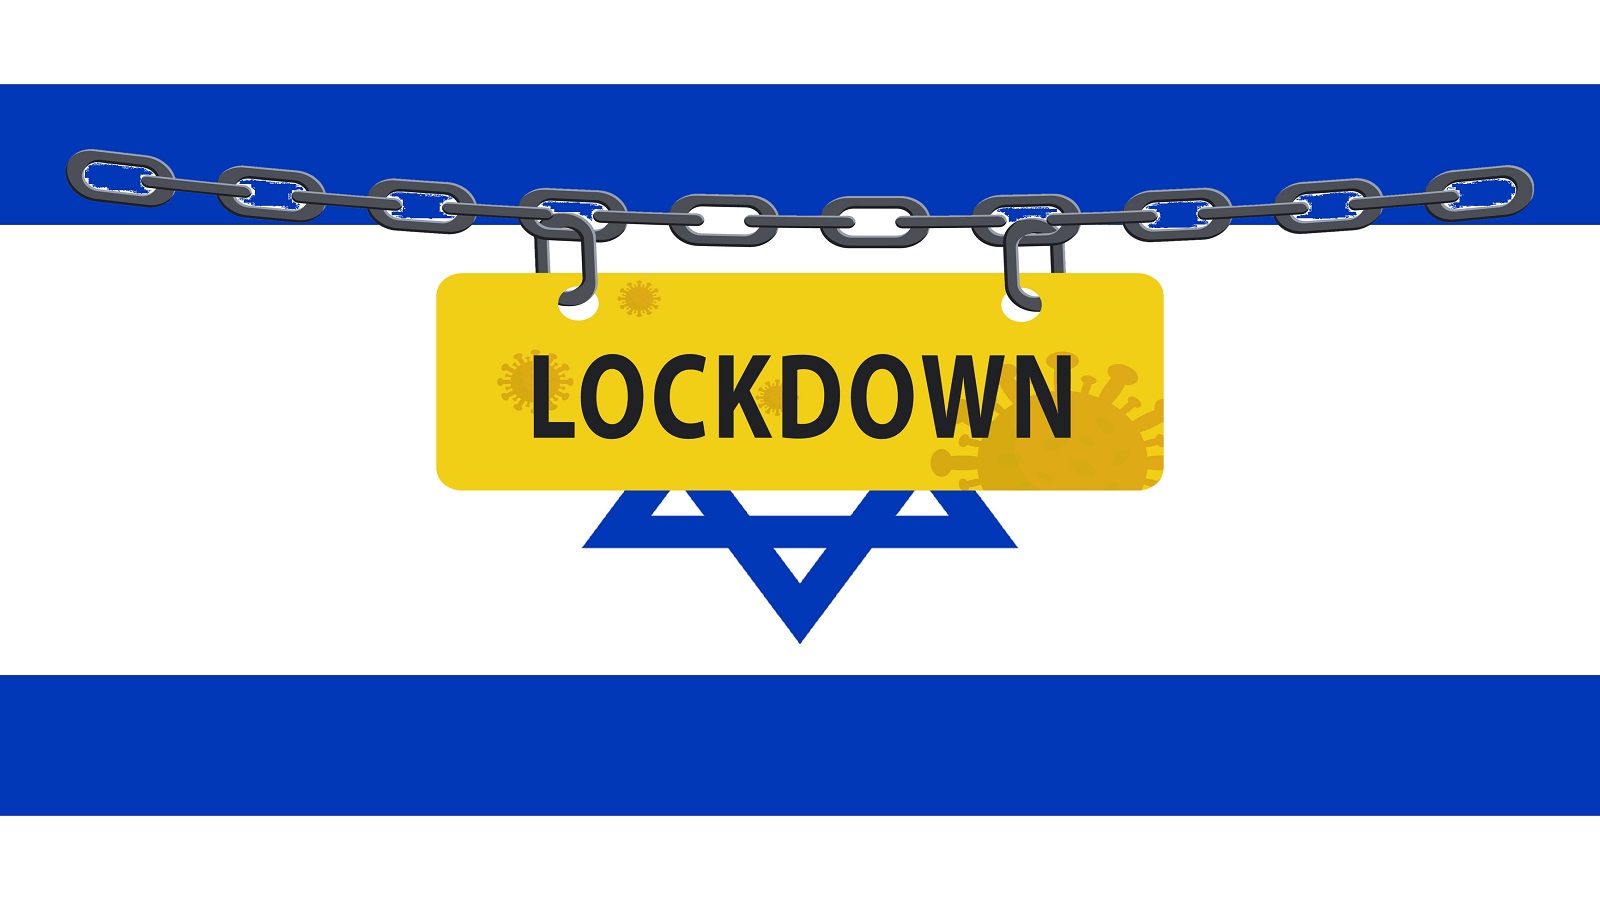 Netanyahu Imposes Draconian Lockdown Against Experts’ Advice